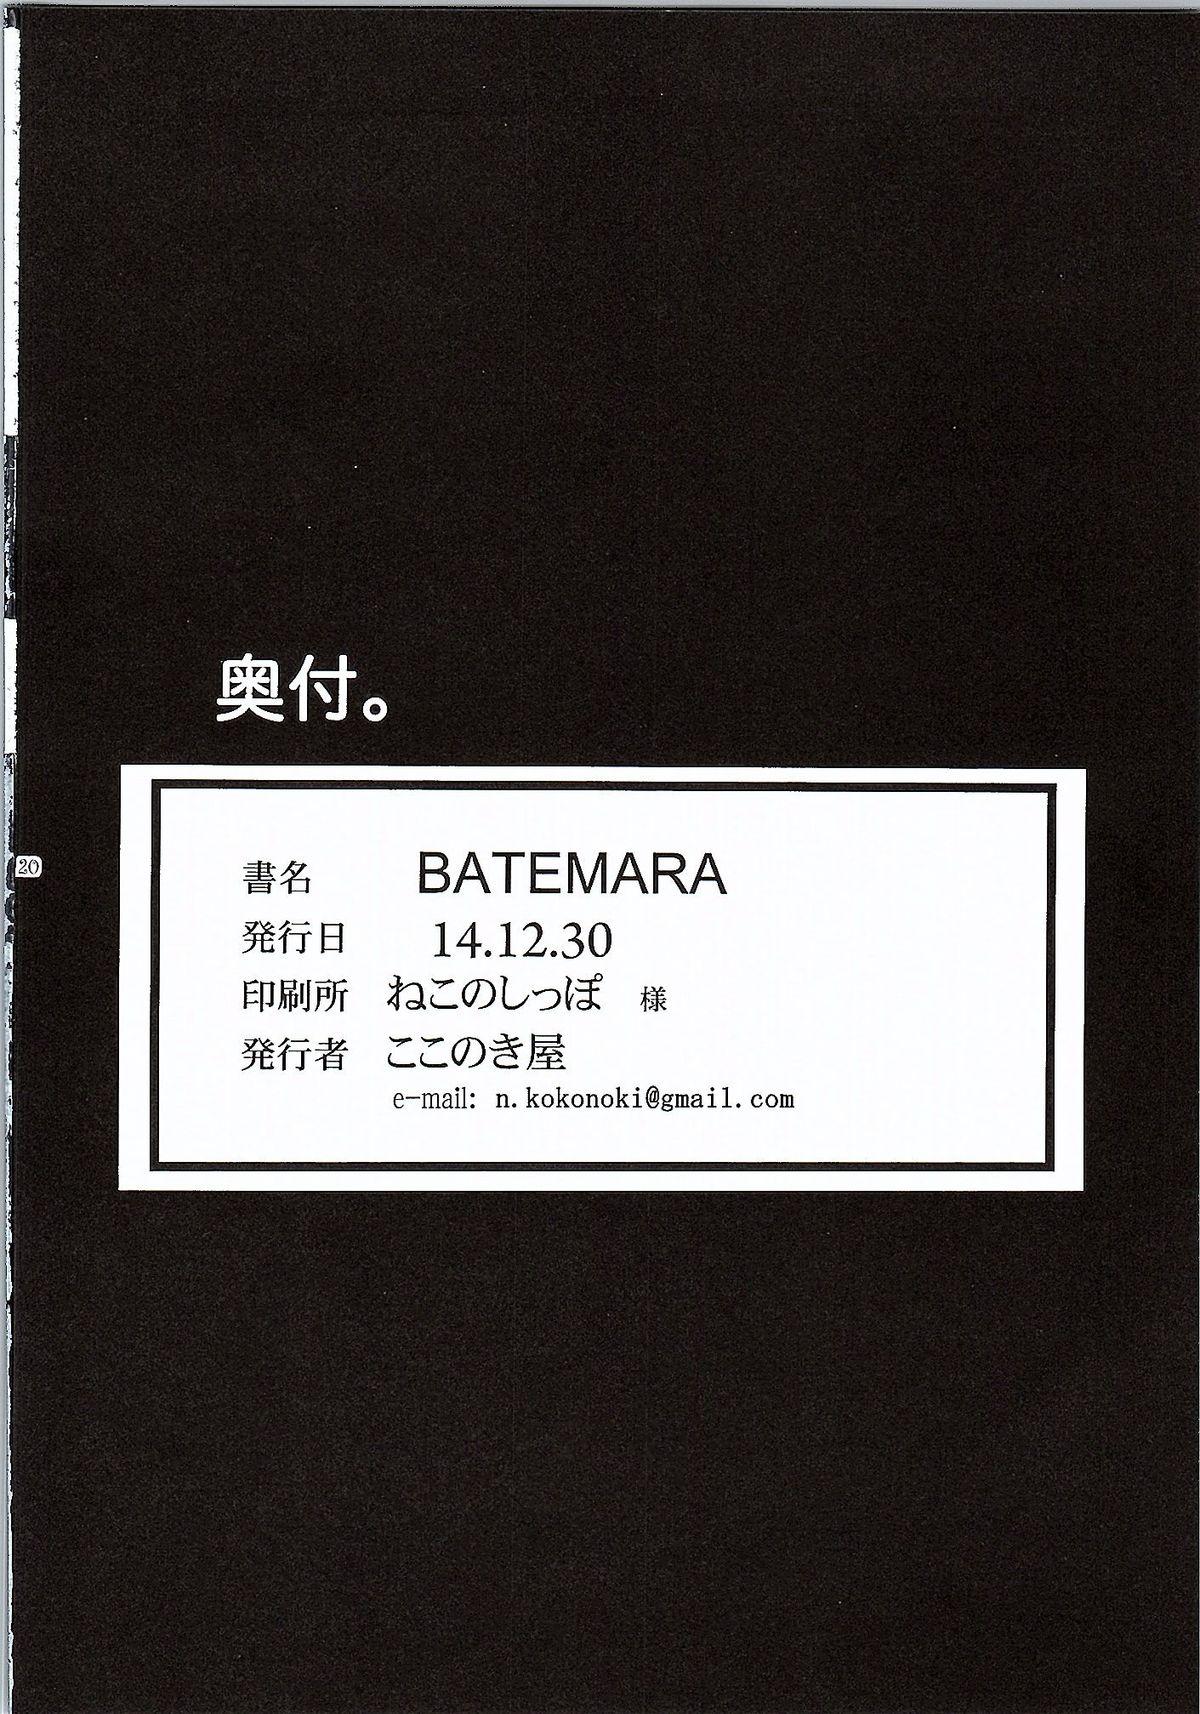 Pornstars BATEMARA - Shirobako Porn Star - Page 19